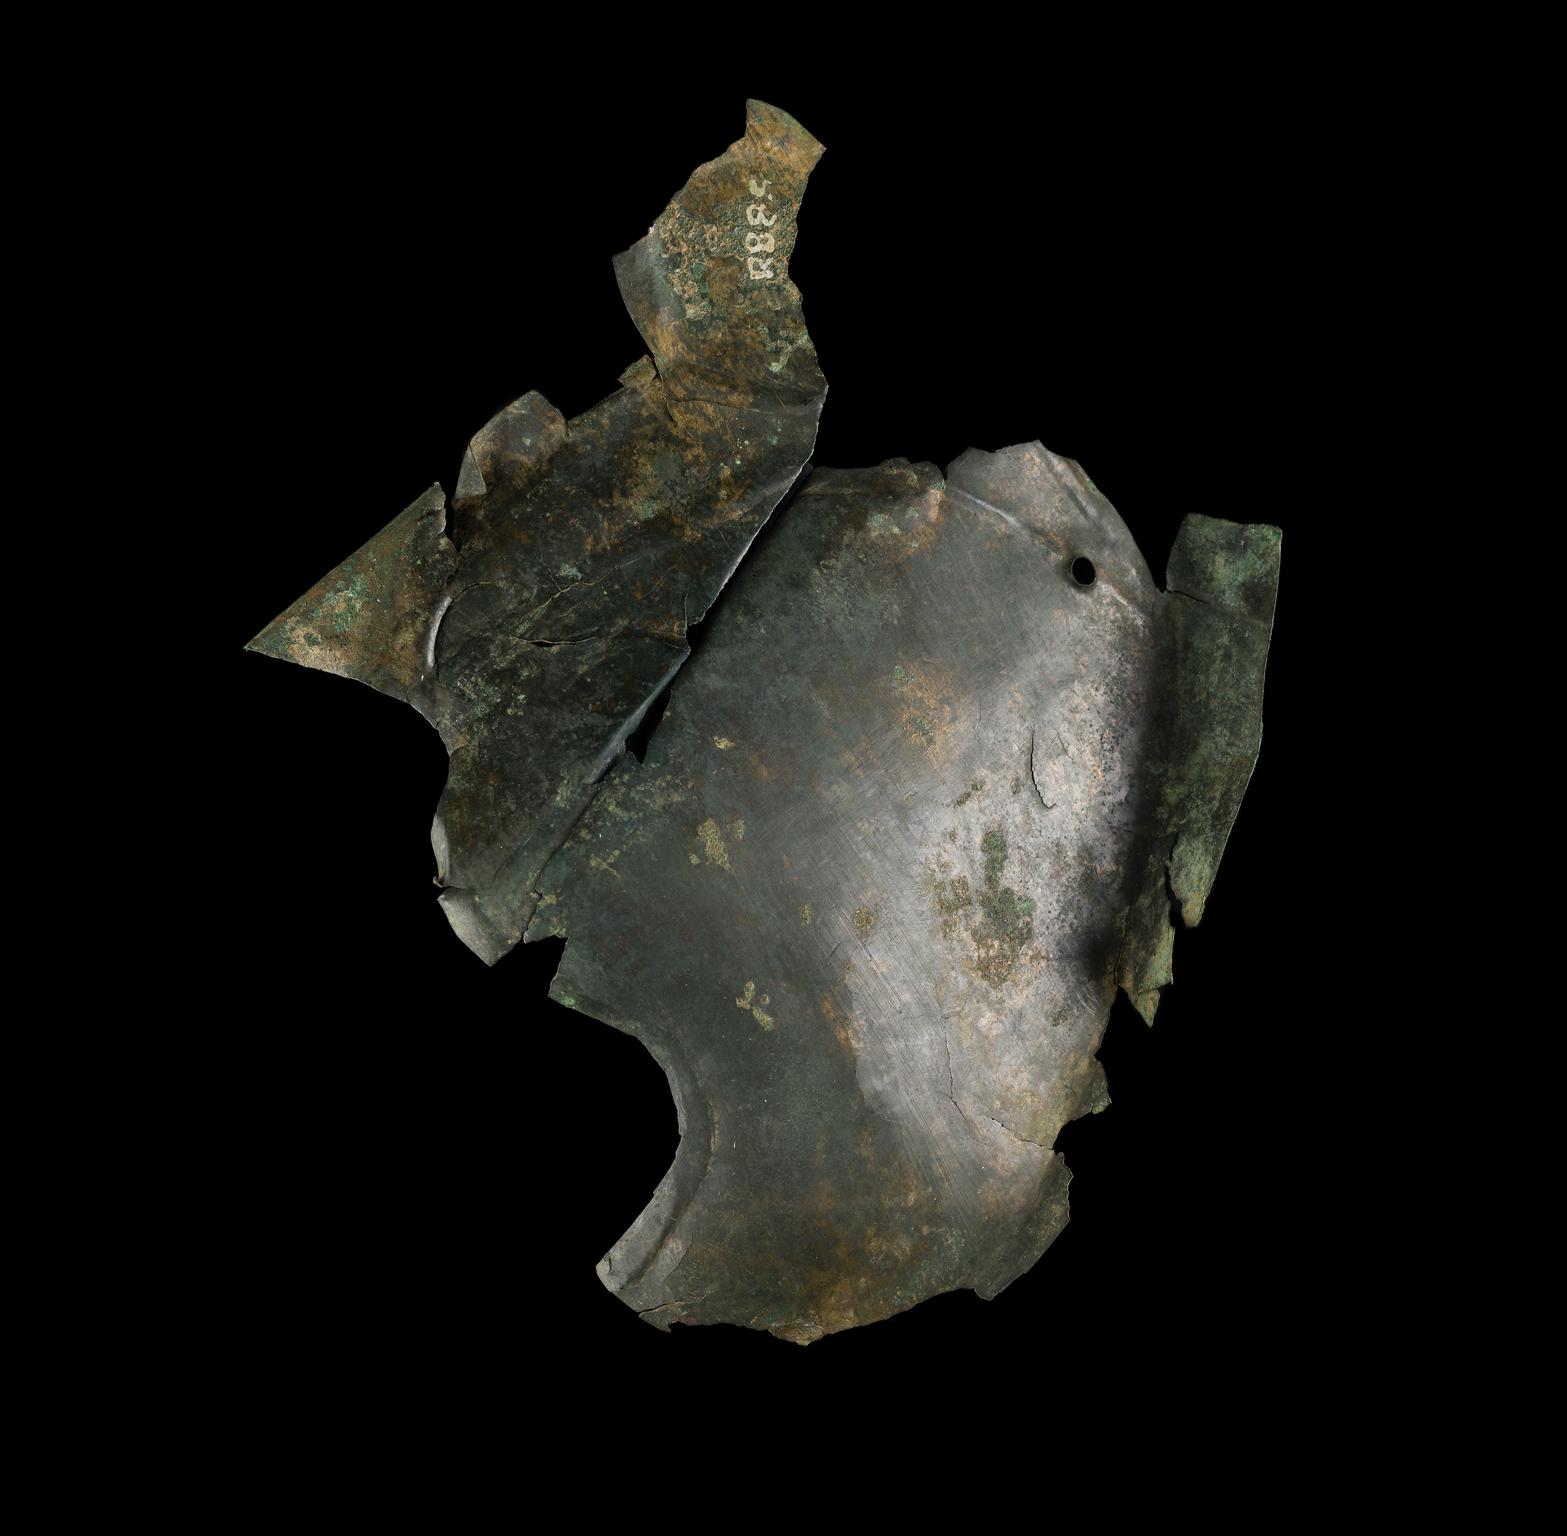 Roman copper alloy cheekpiece from helmet